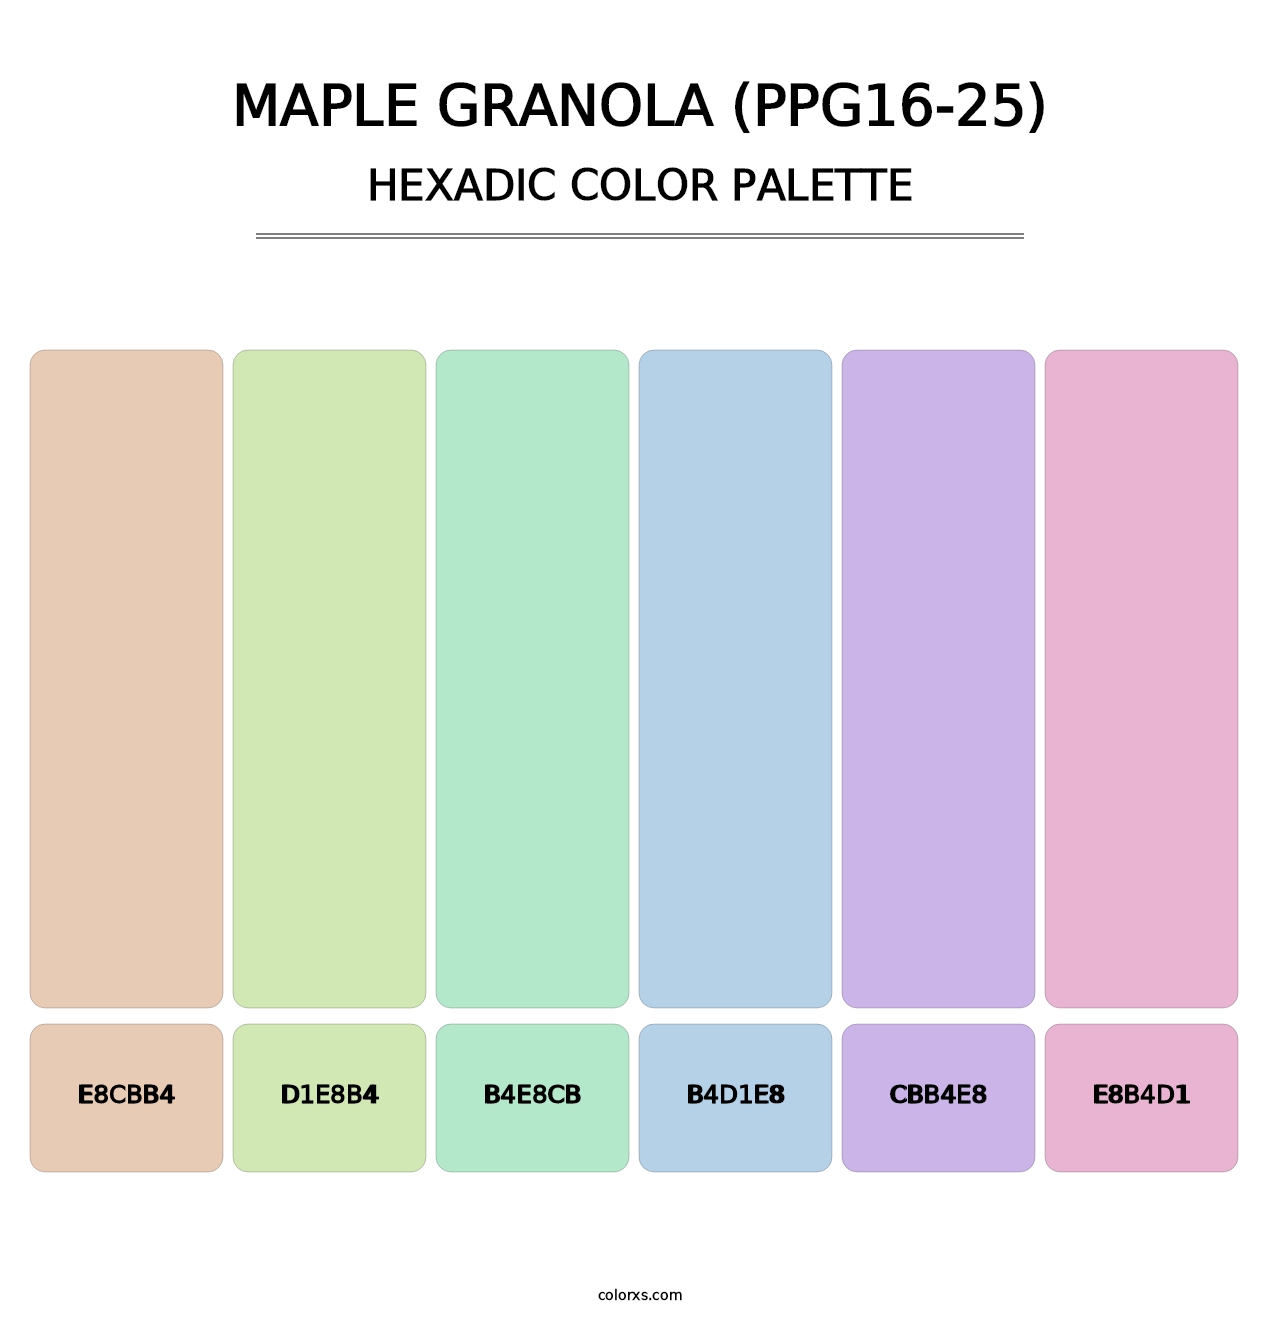 Maple Granola (PPG16-25) - Hexadic Color Palette